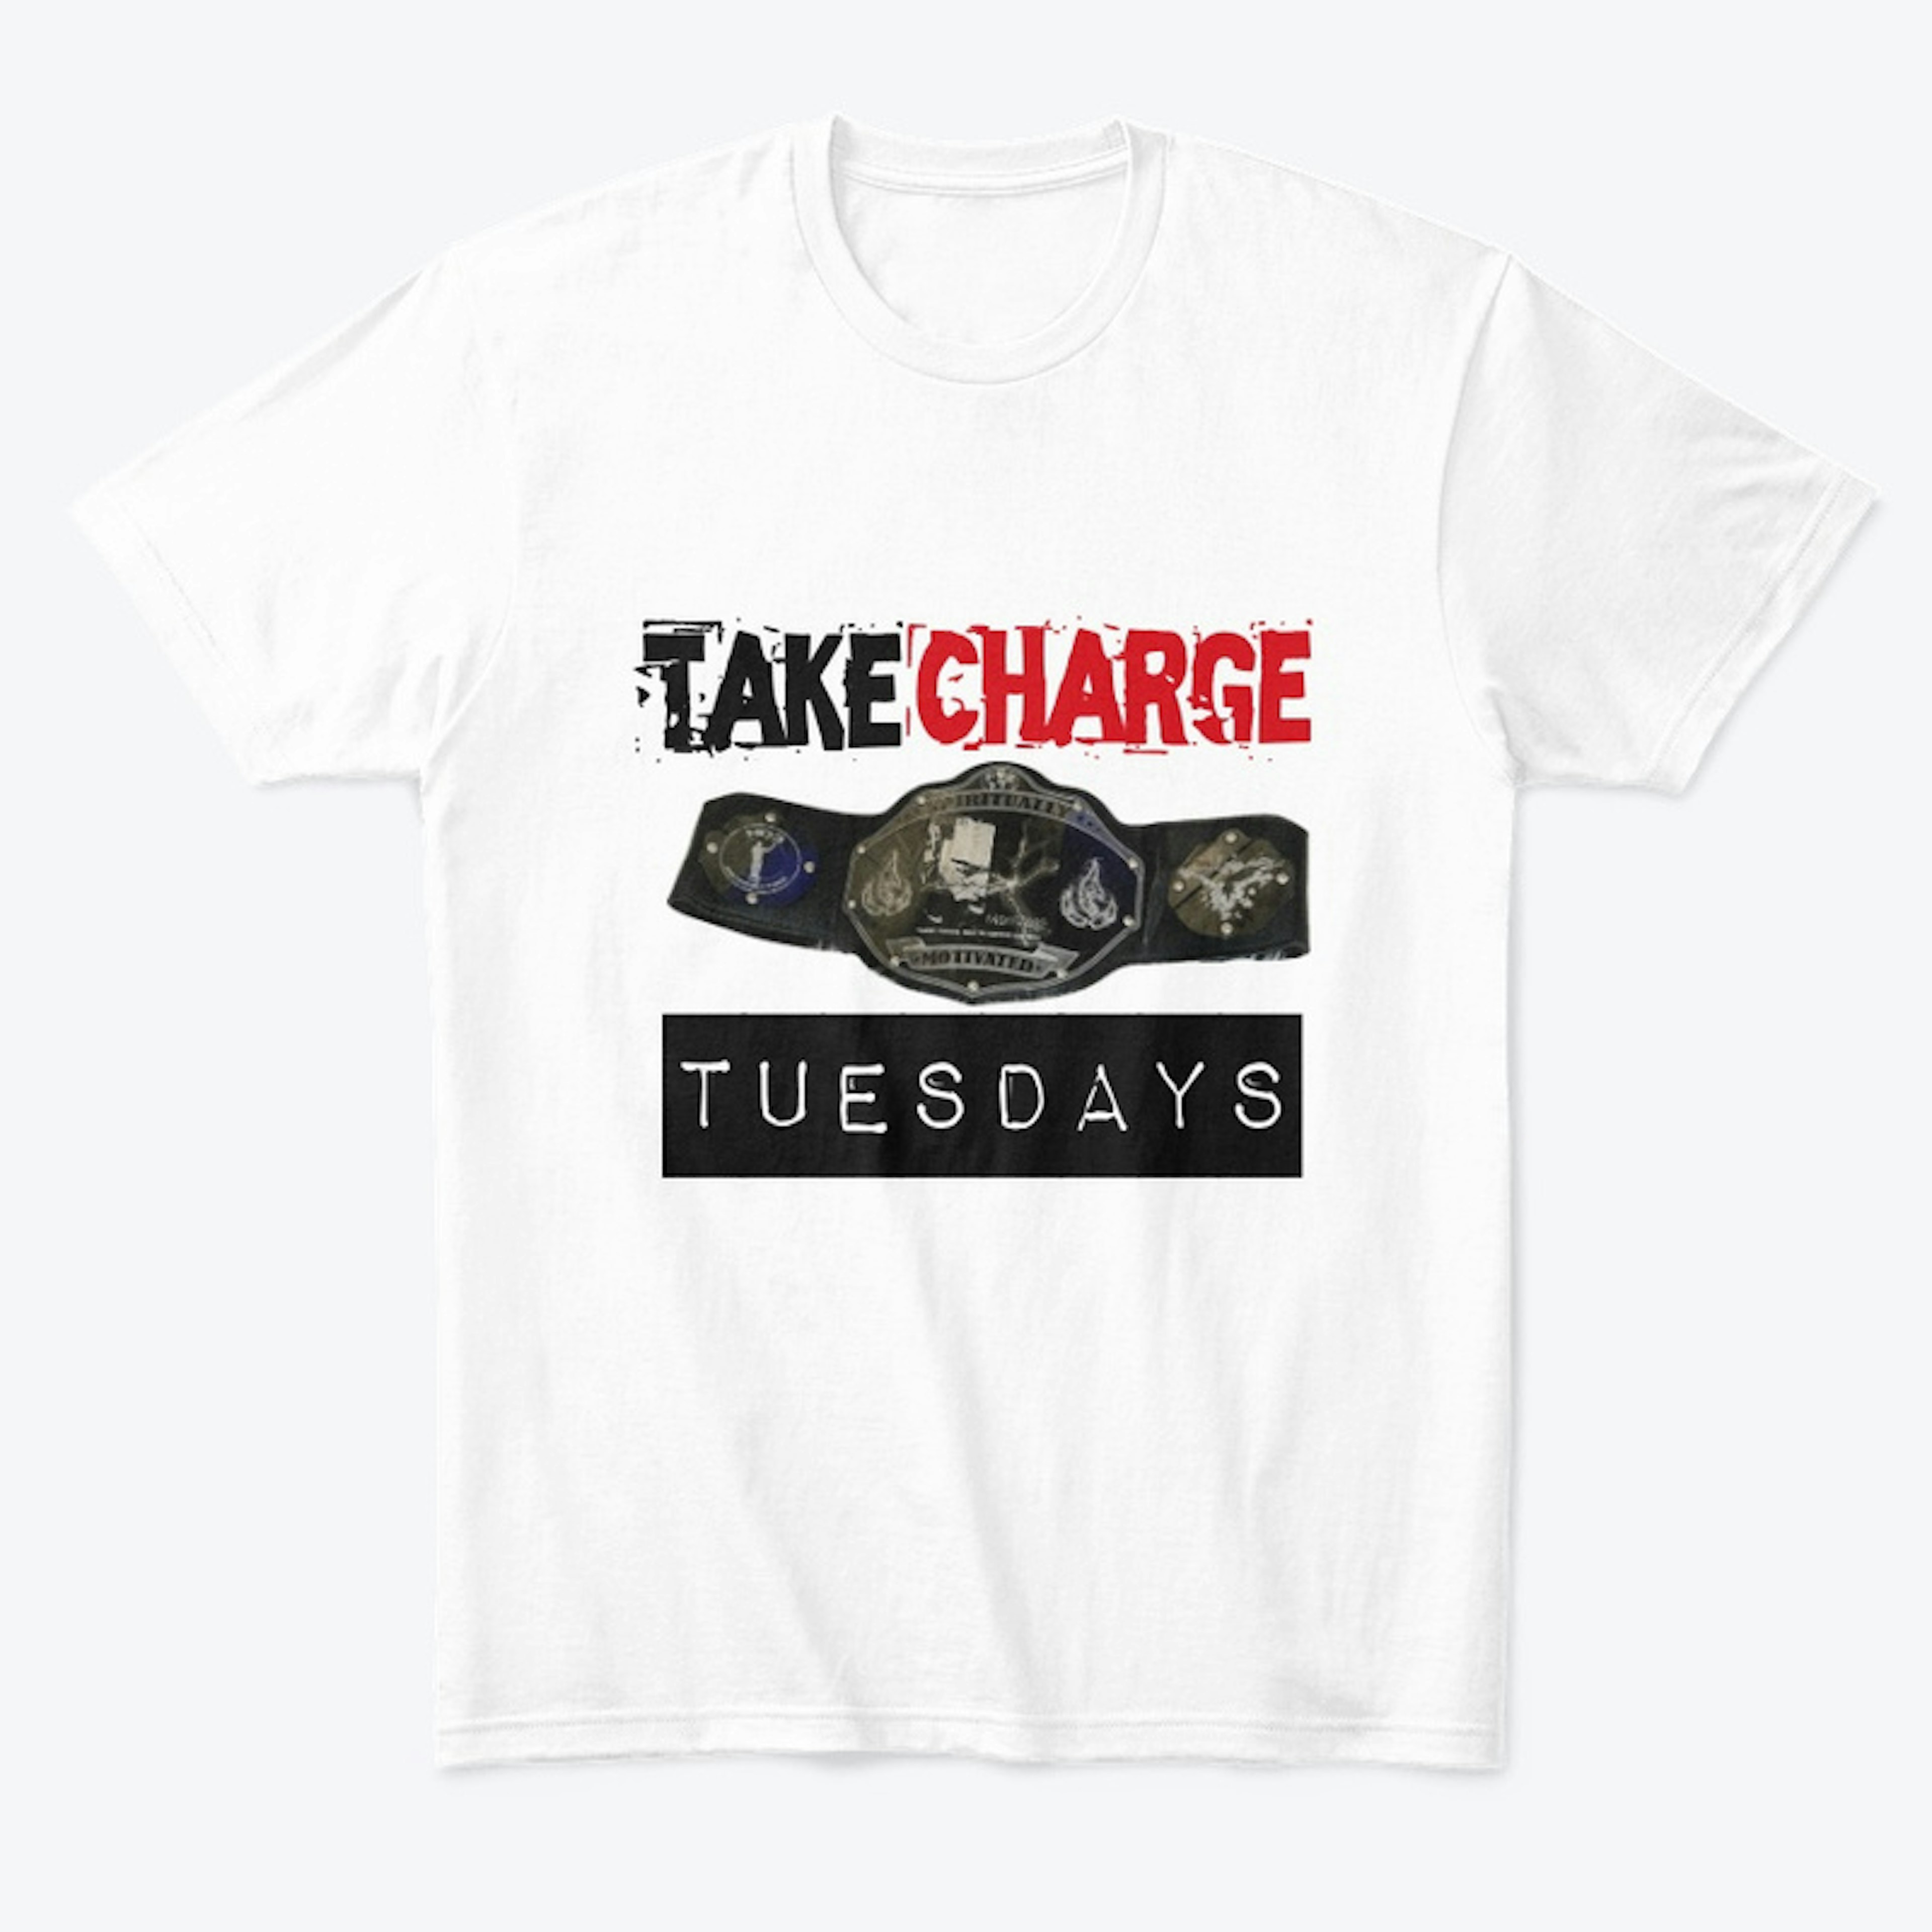 Take Charge Tuesdays